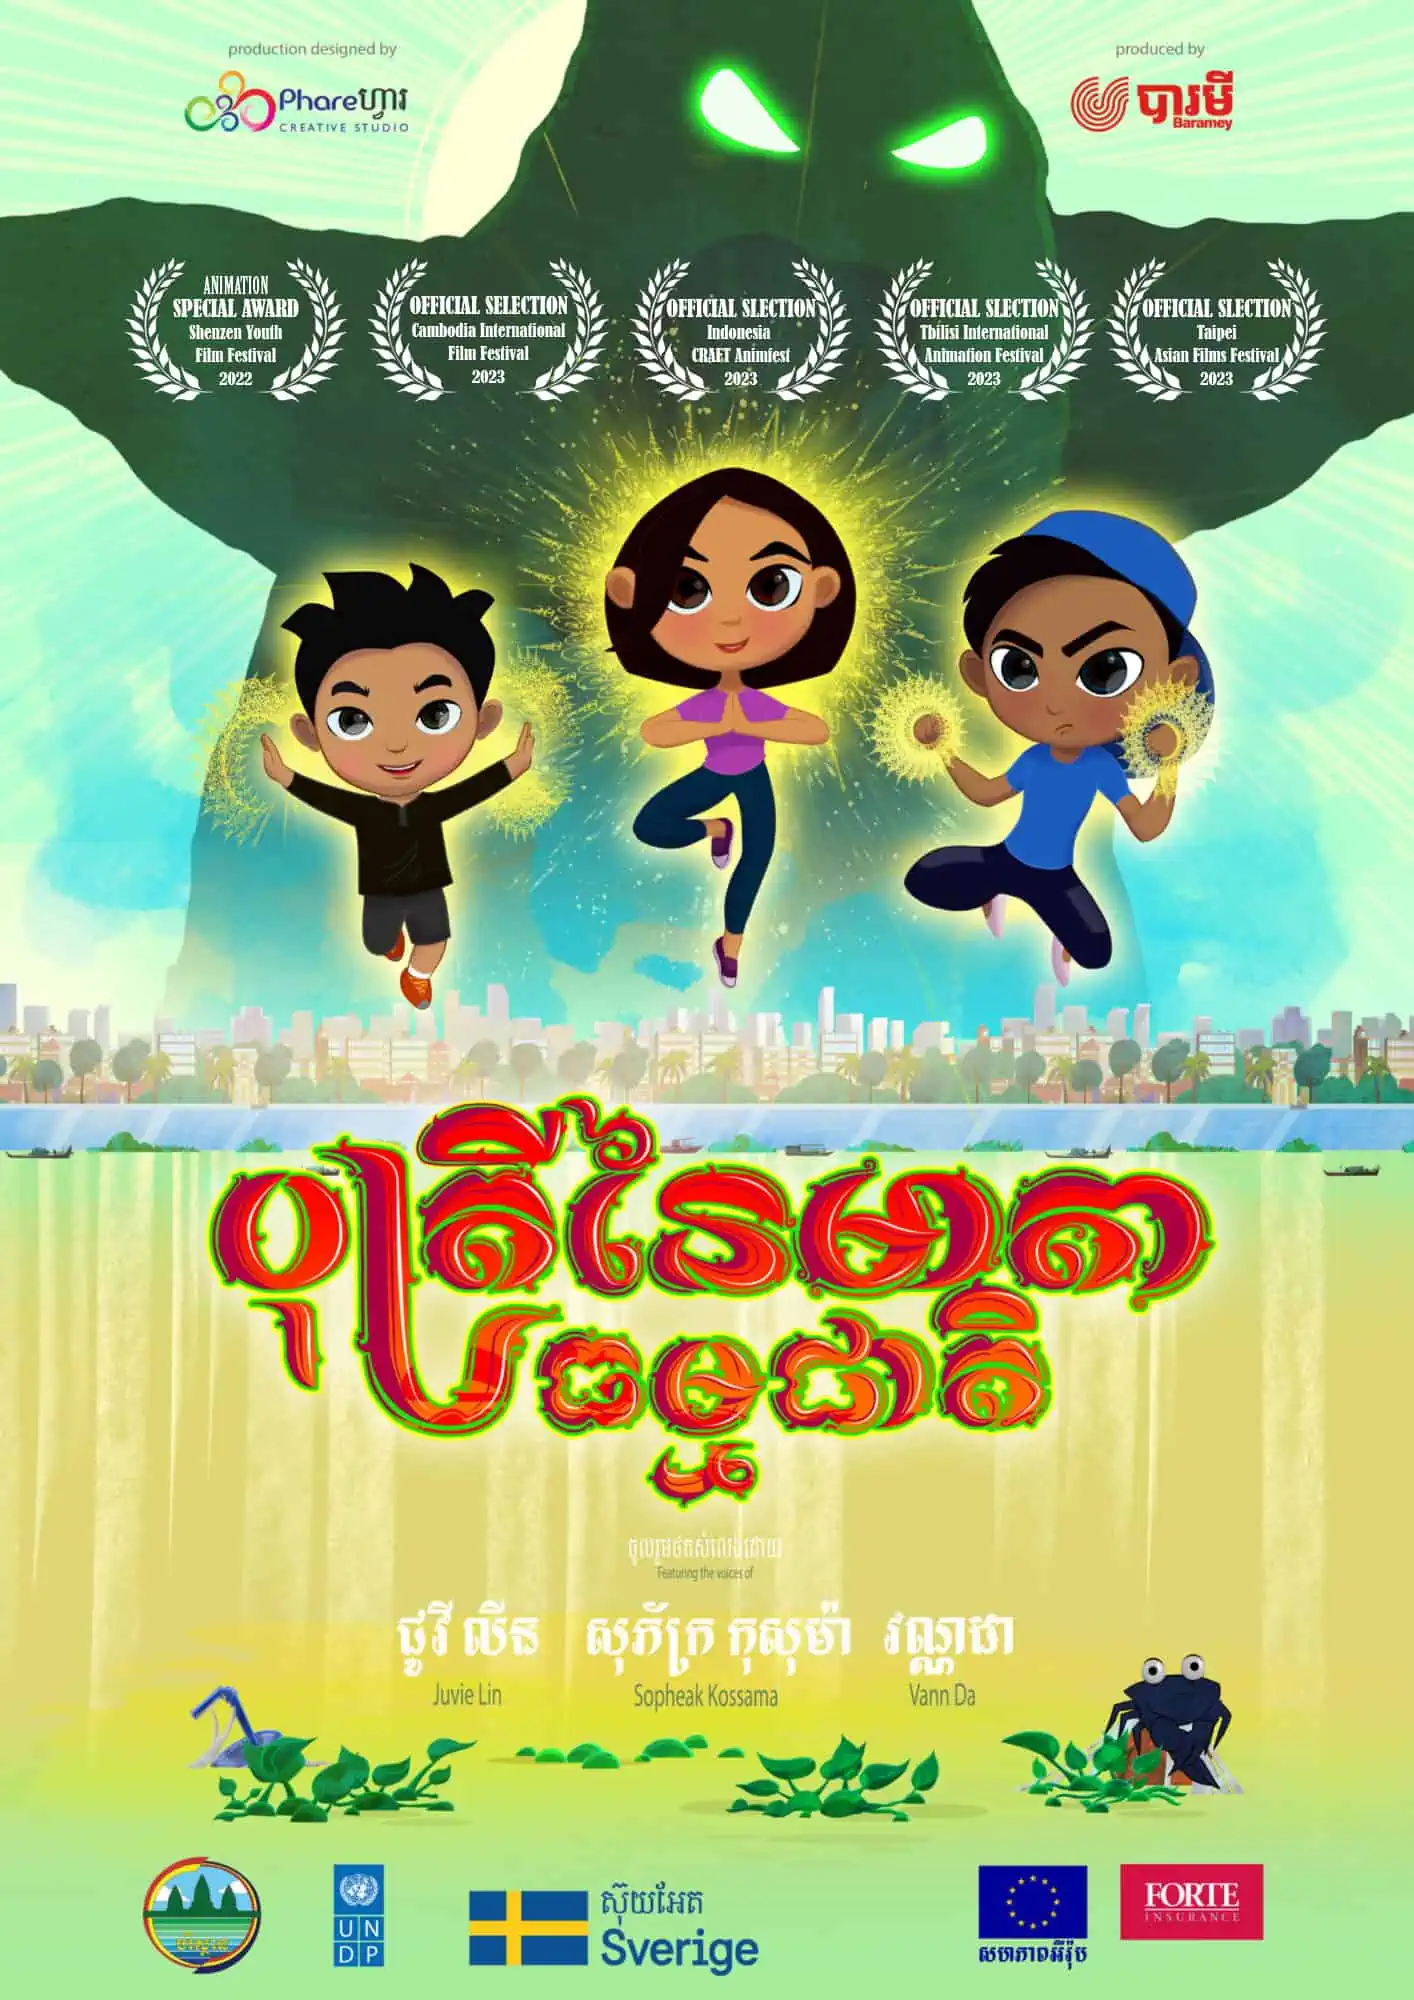 Animation serie, cambodia, for Baramey production, designed by Phare Creative Studio